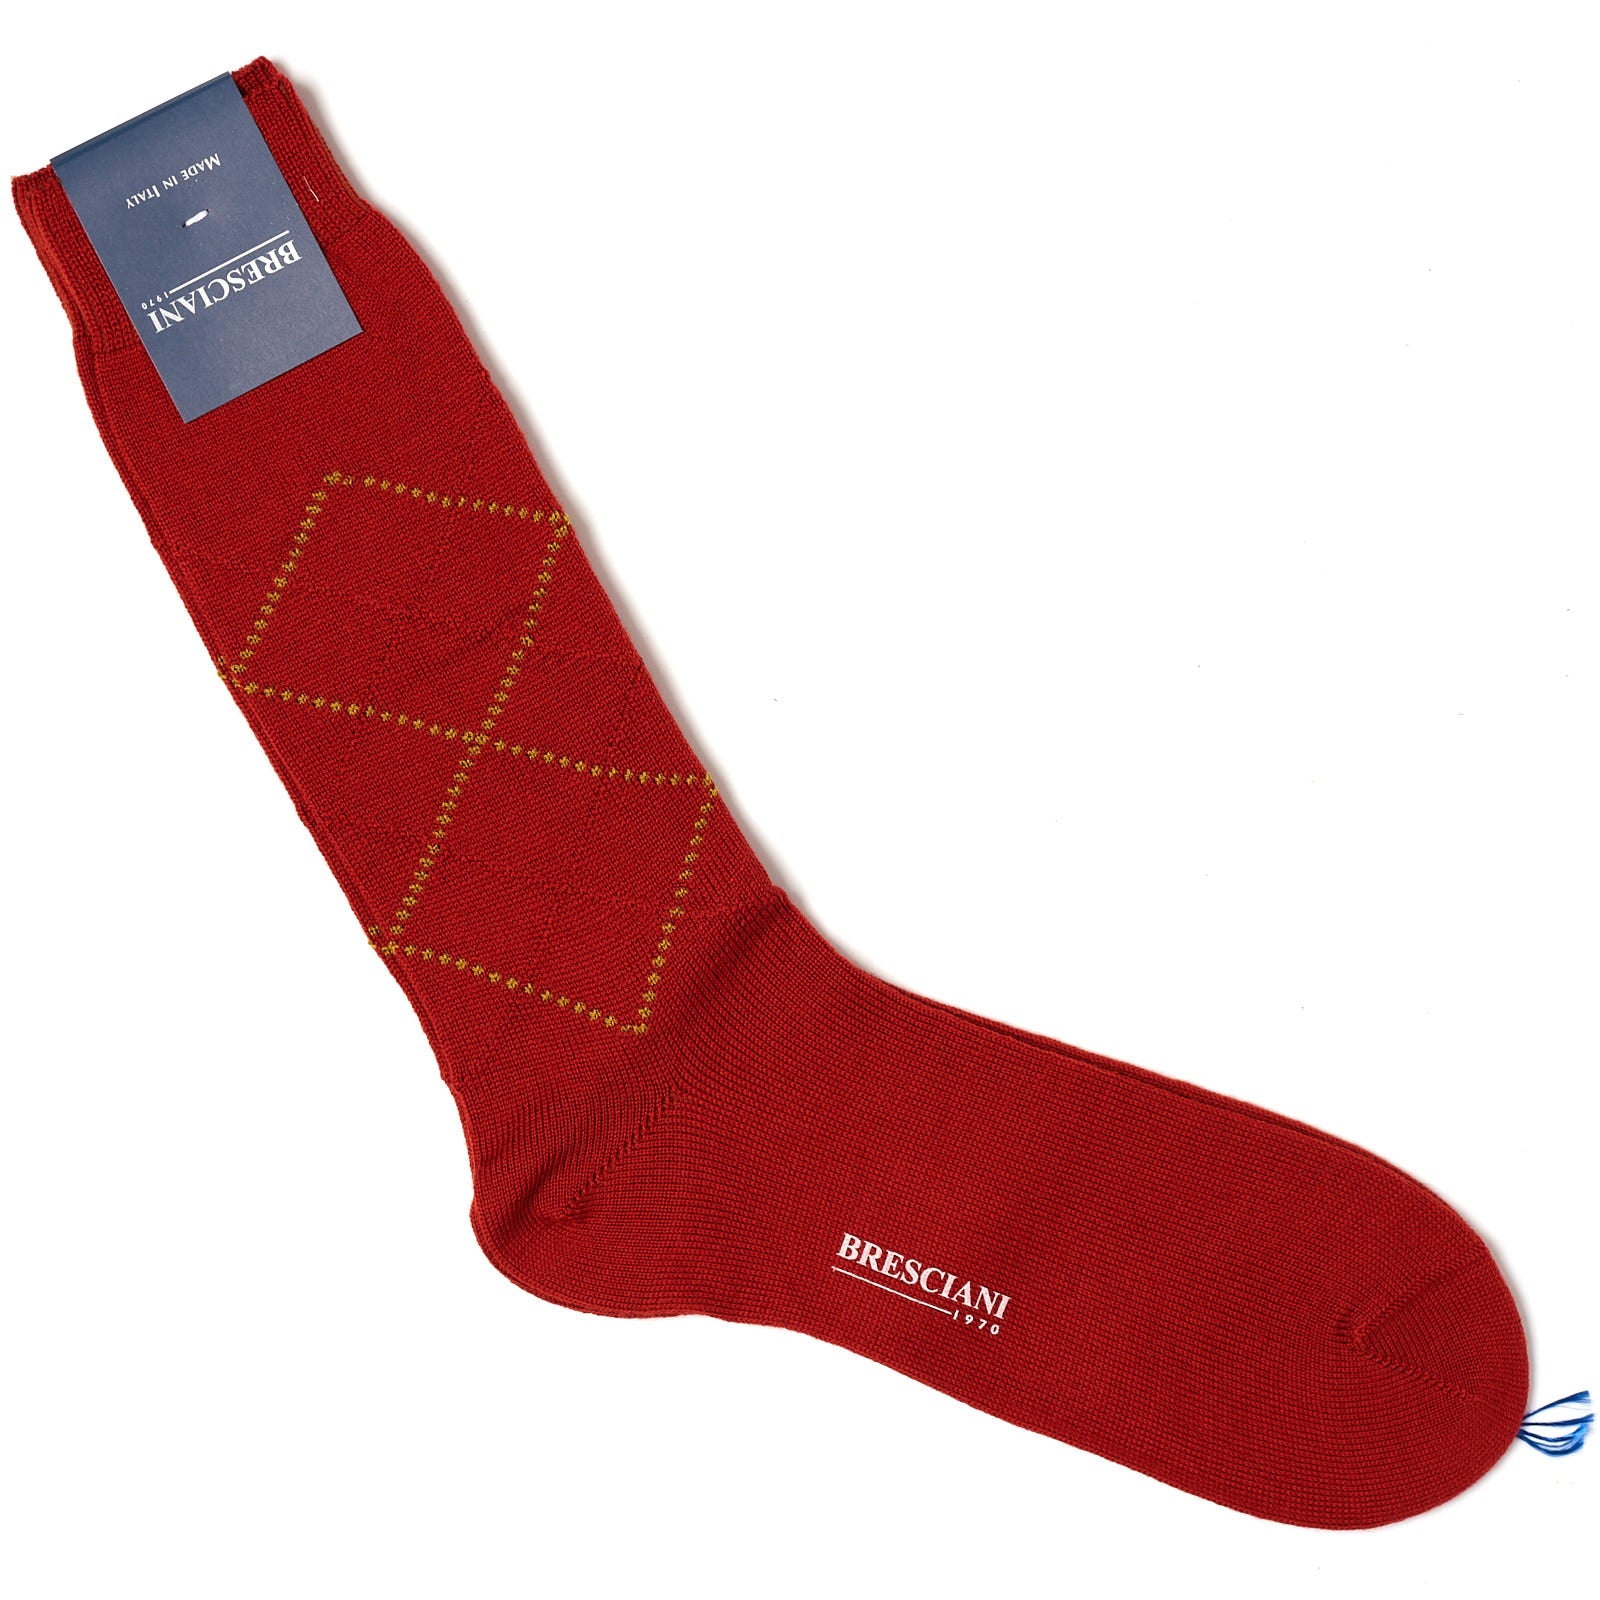 BRESCIANI Wool Argyle Design Mid Calf Length Socks US M-L BRESCIANI